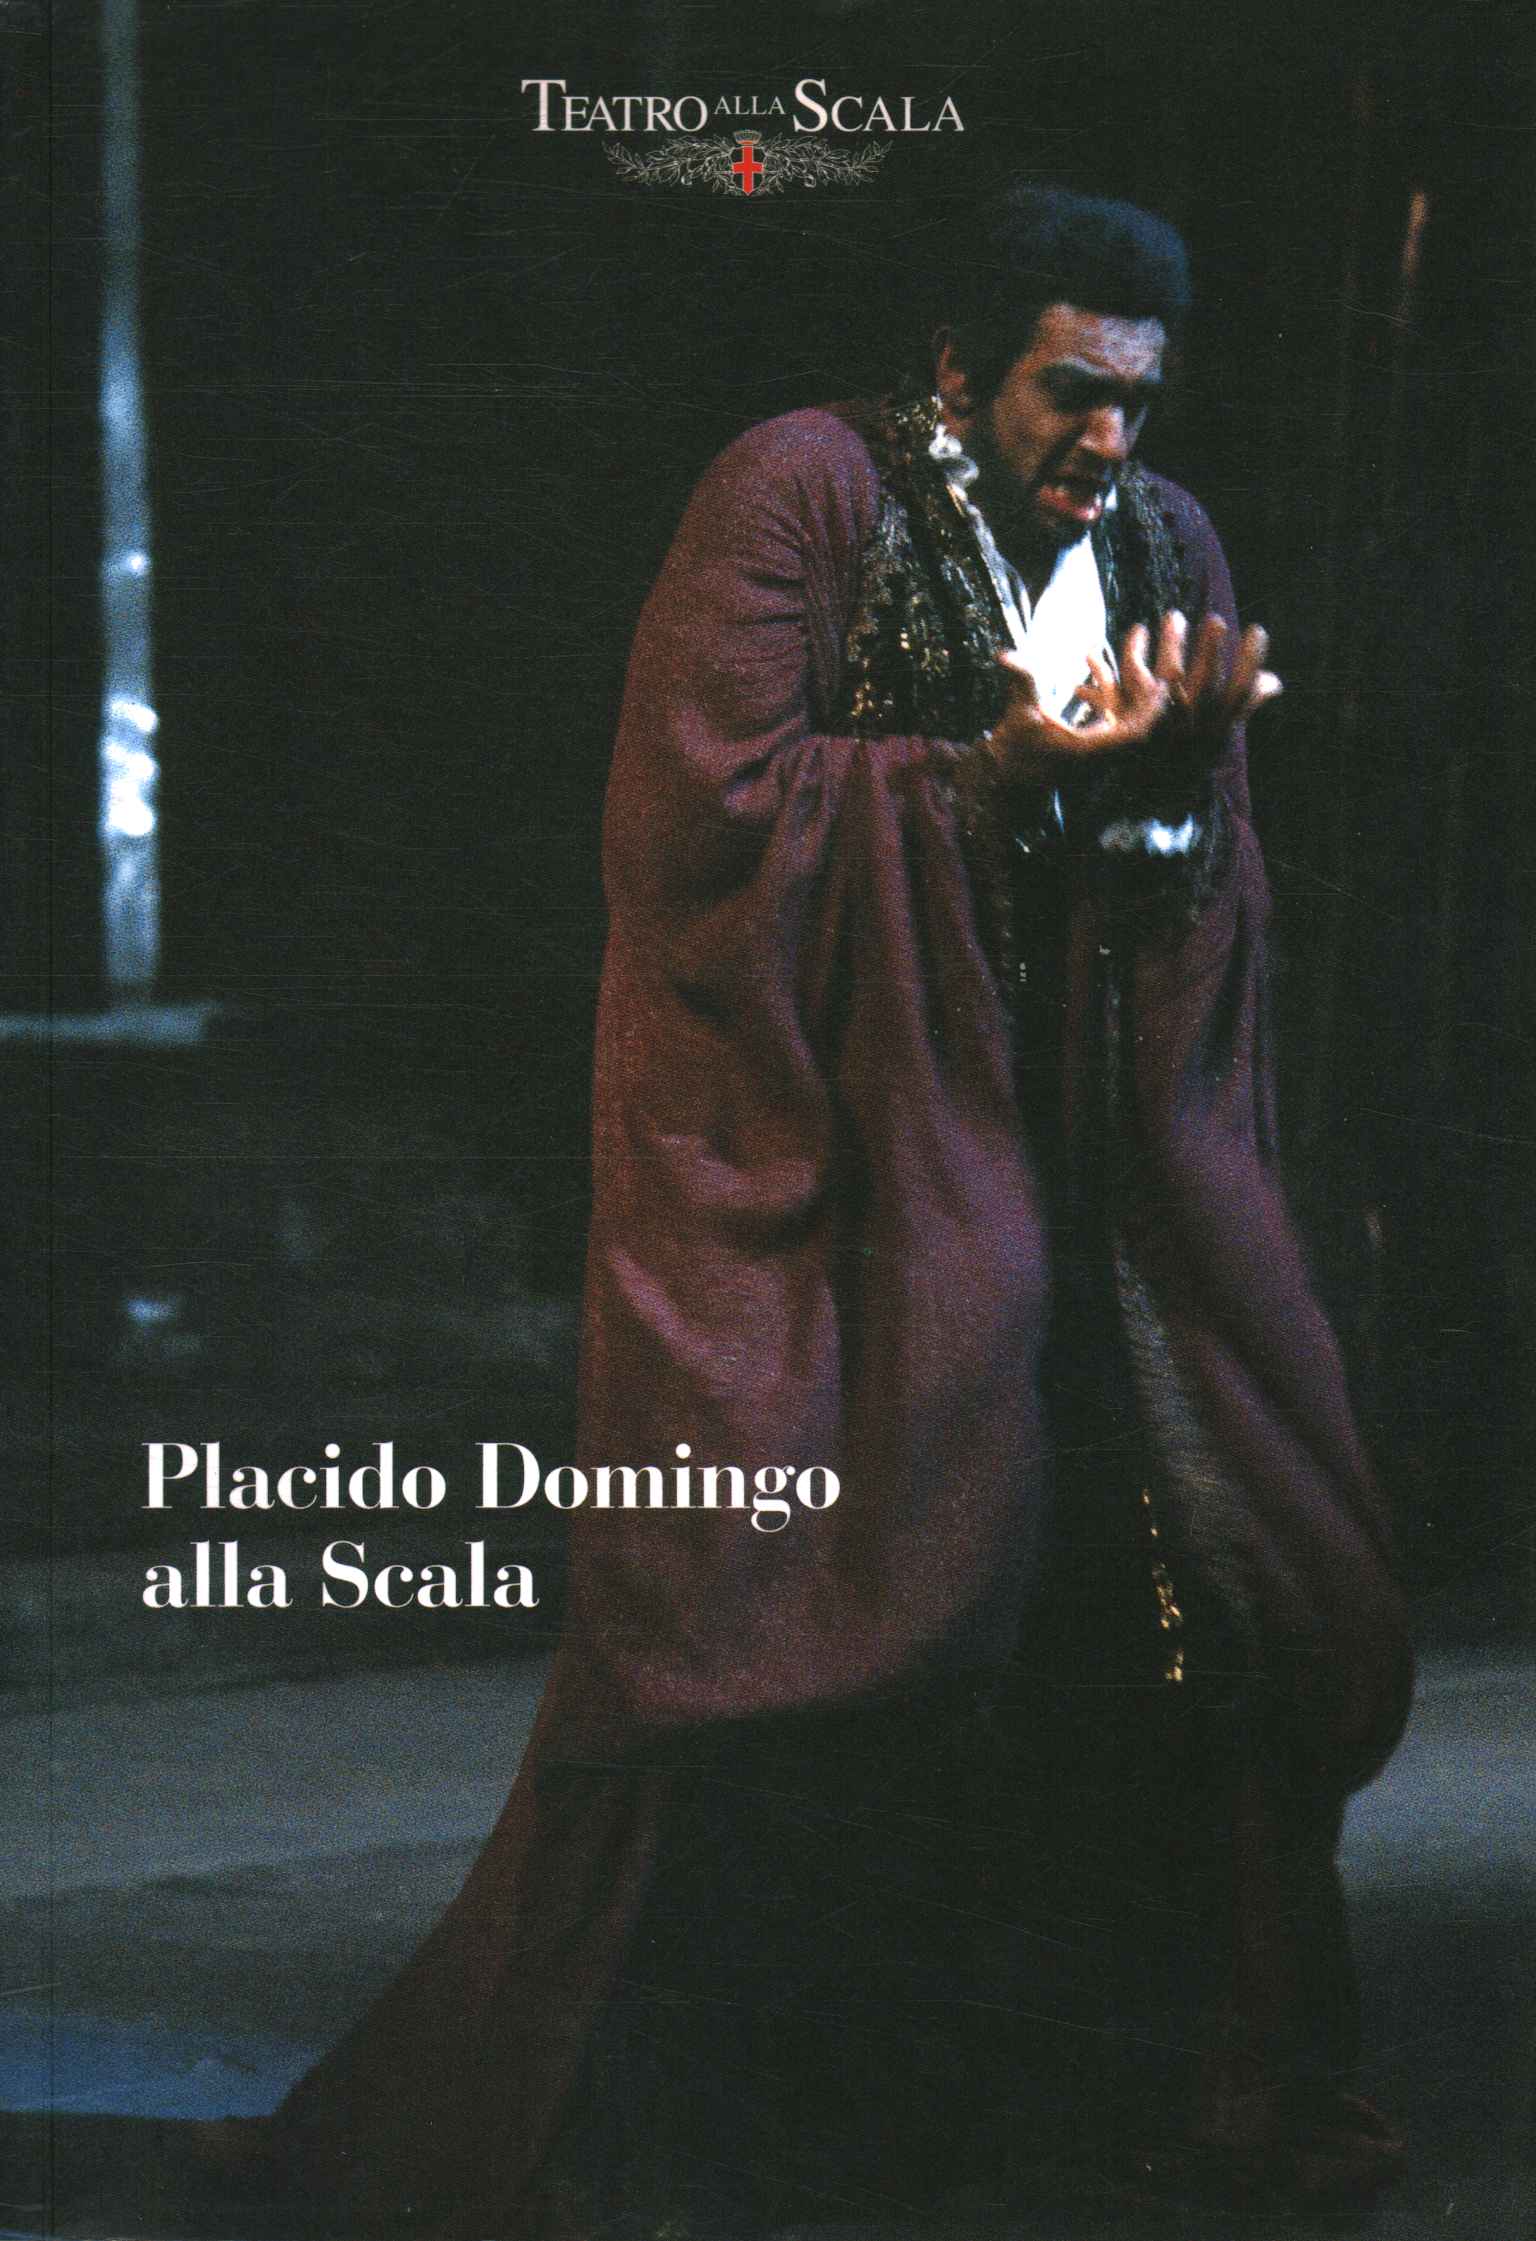 Placido Domingo an der Scala